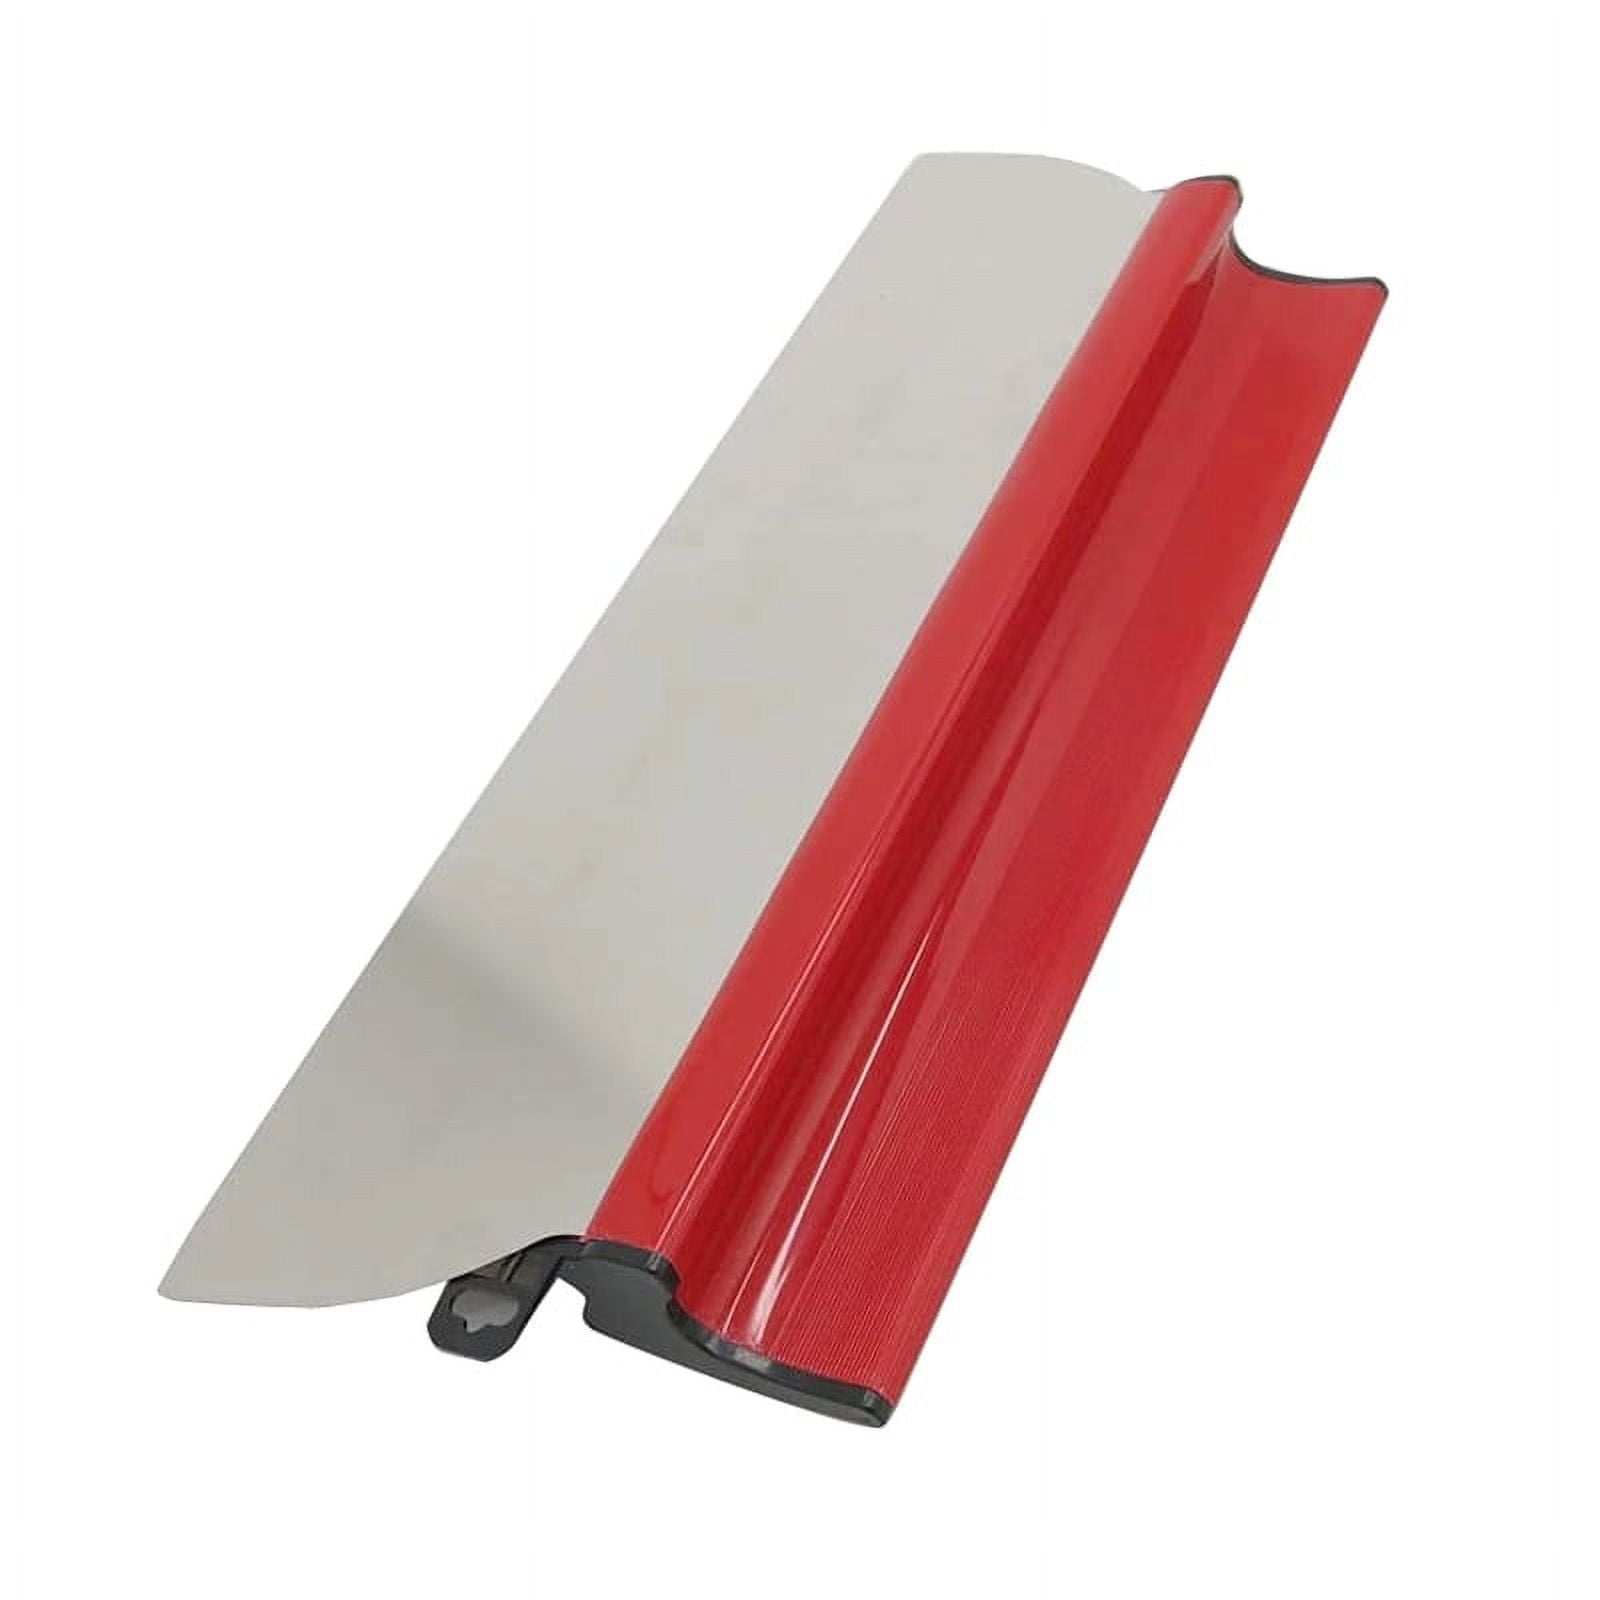 ordersoft rubber blade magic trowel 360mm